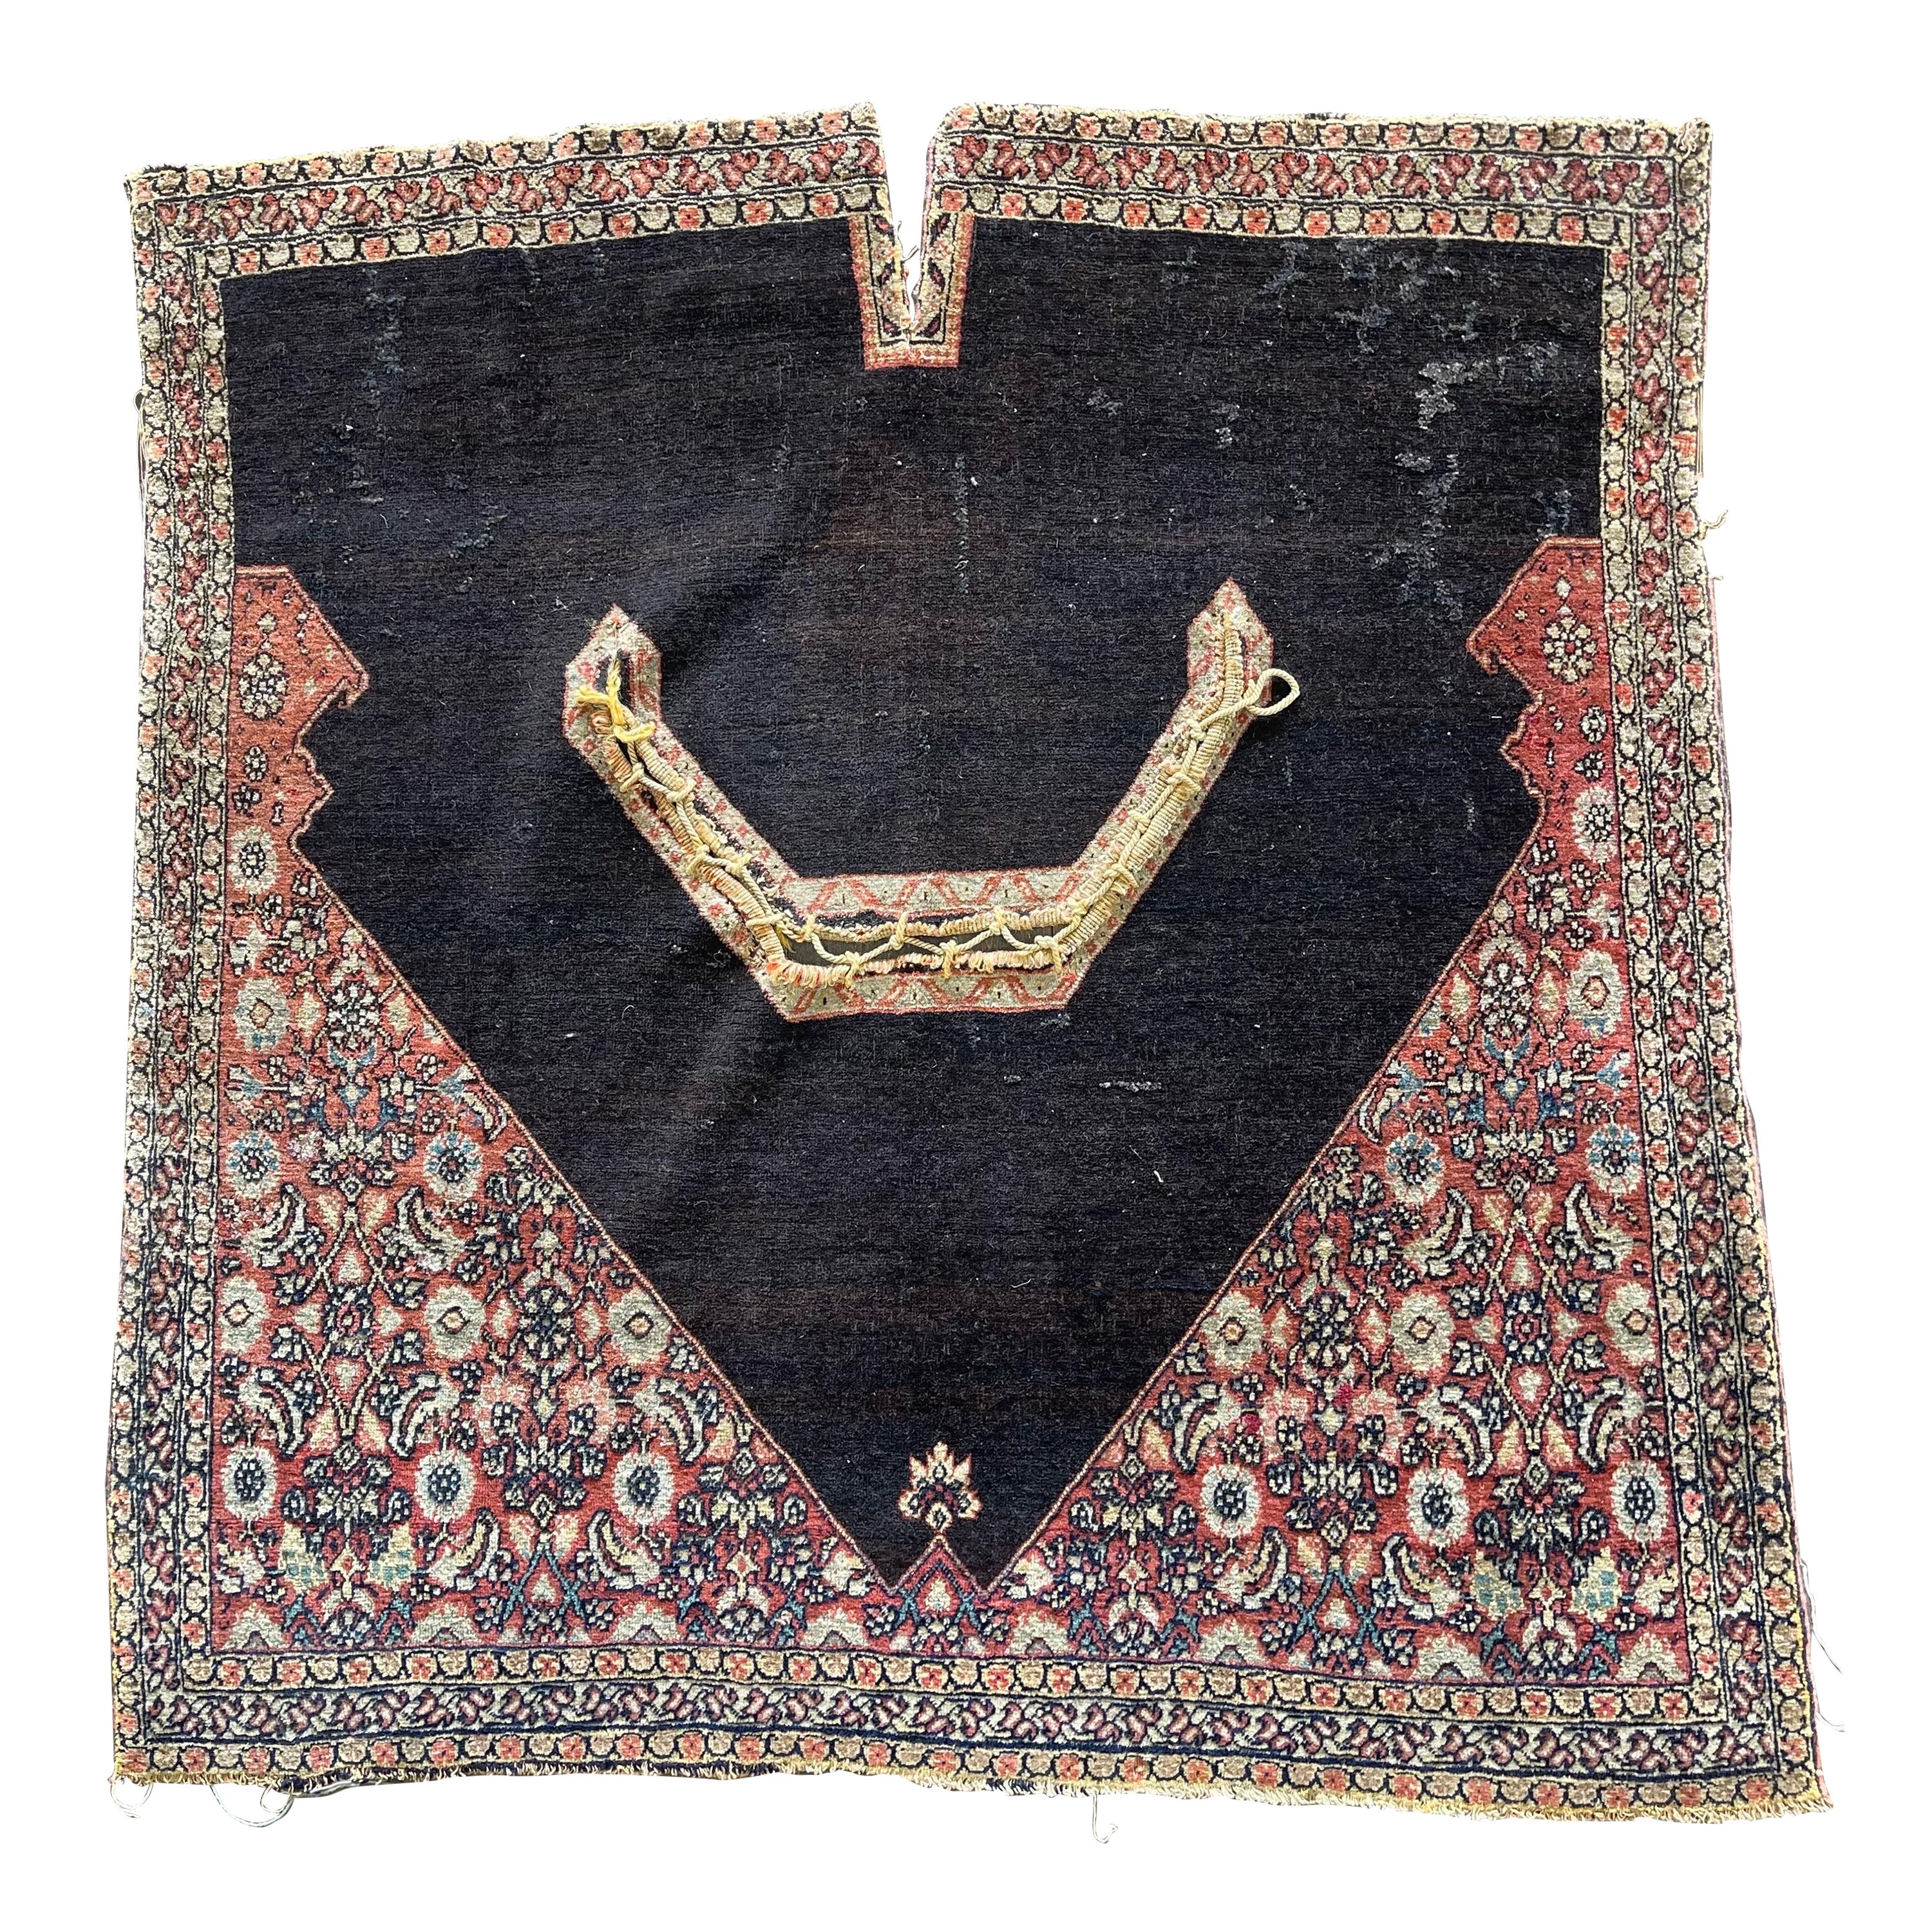 19th Century Antique Persian Senneh Horse Cover